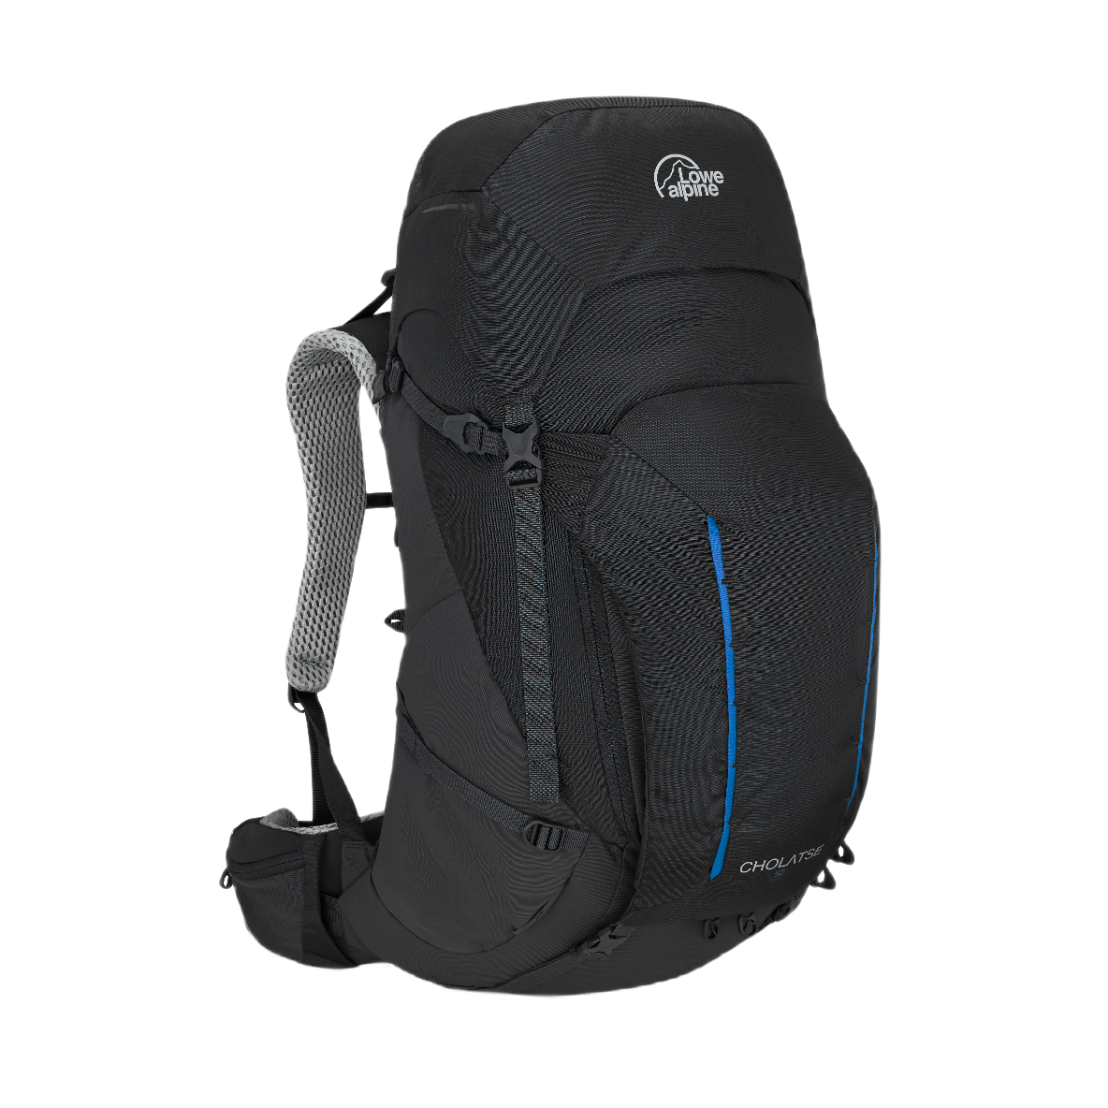 Lowe Alpine Cholatse Backpack